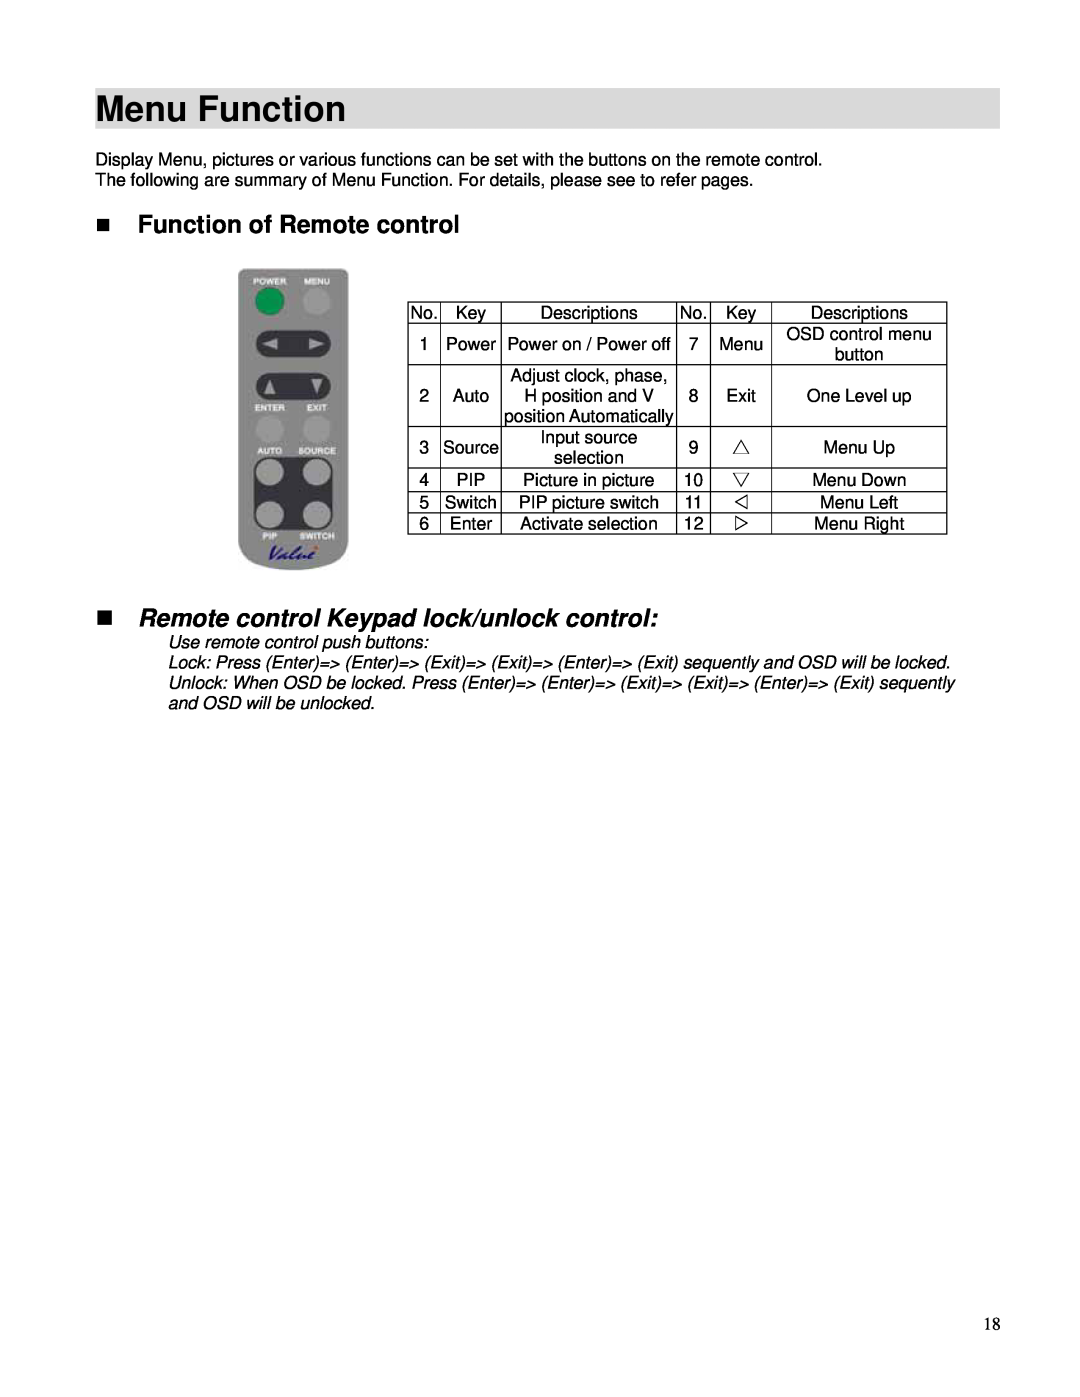 Toshiba P42LHA owner manual Menu Function, Function of Remote control, Remote control Keypad lock/unlock control 